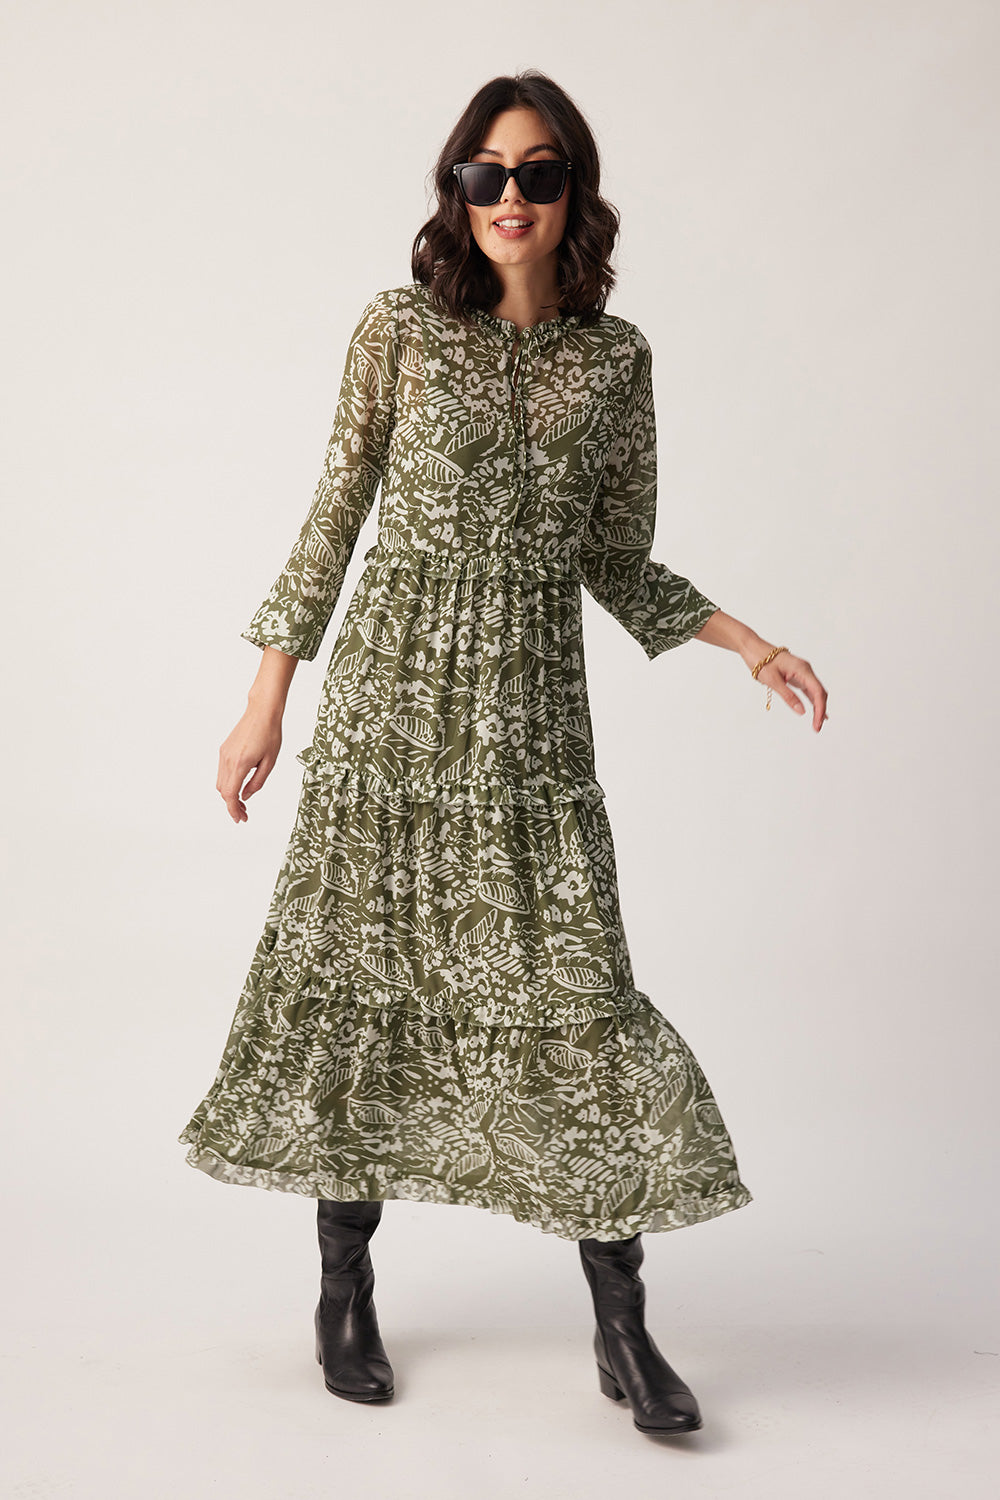 Ecote Floral Fishnet Long-Sleeve Maxi Dress